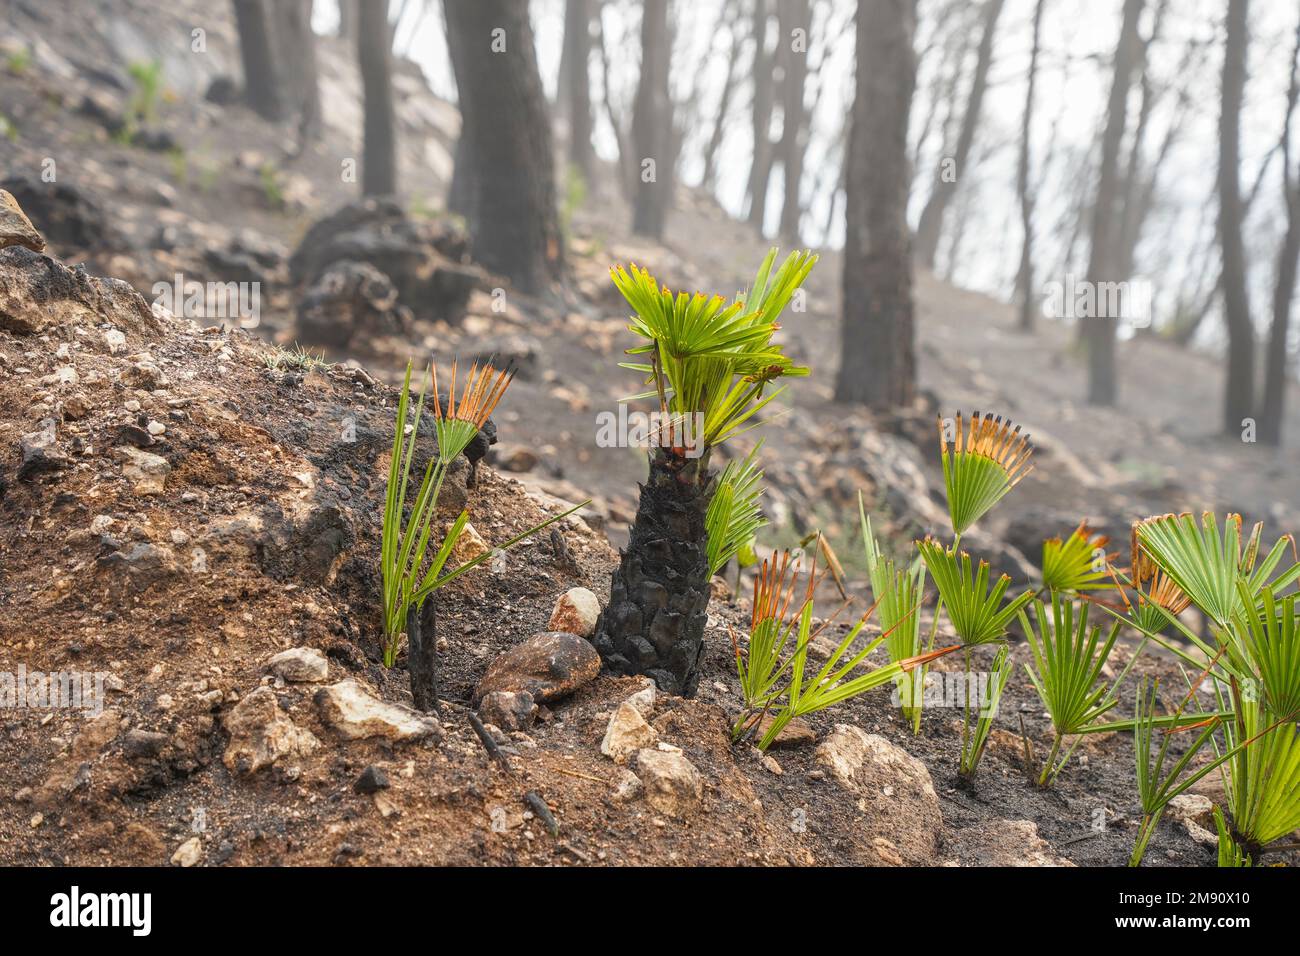 European fan palm, Chamaerops humilis growing back after wildfire, Spain. Stock Photo